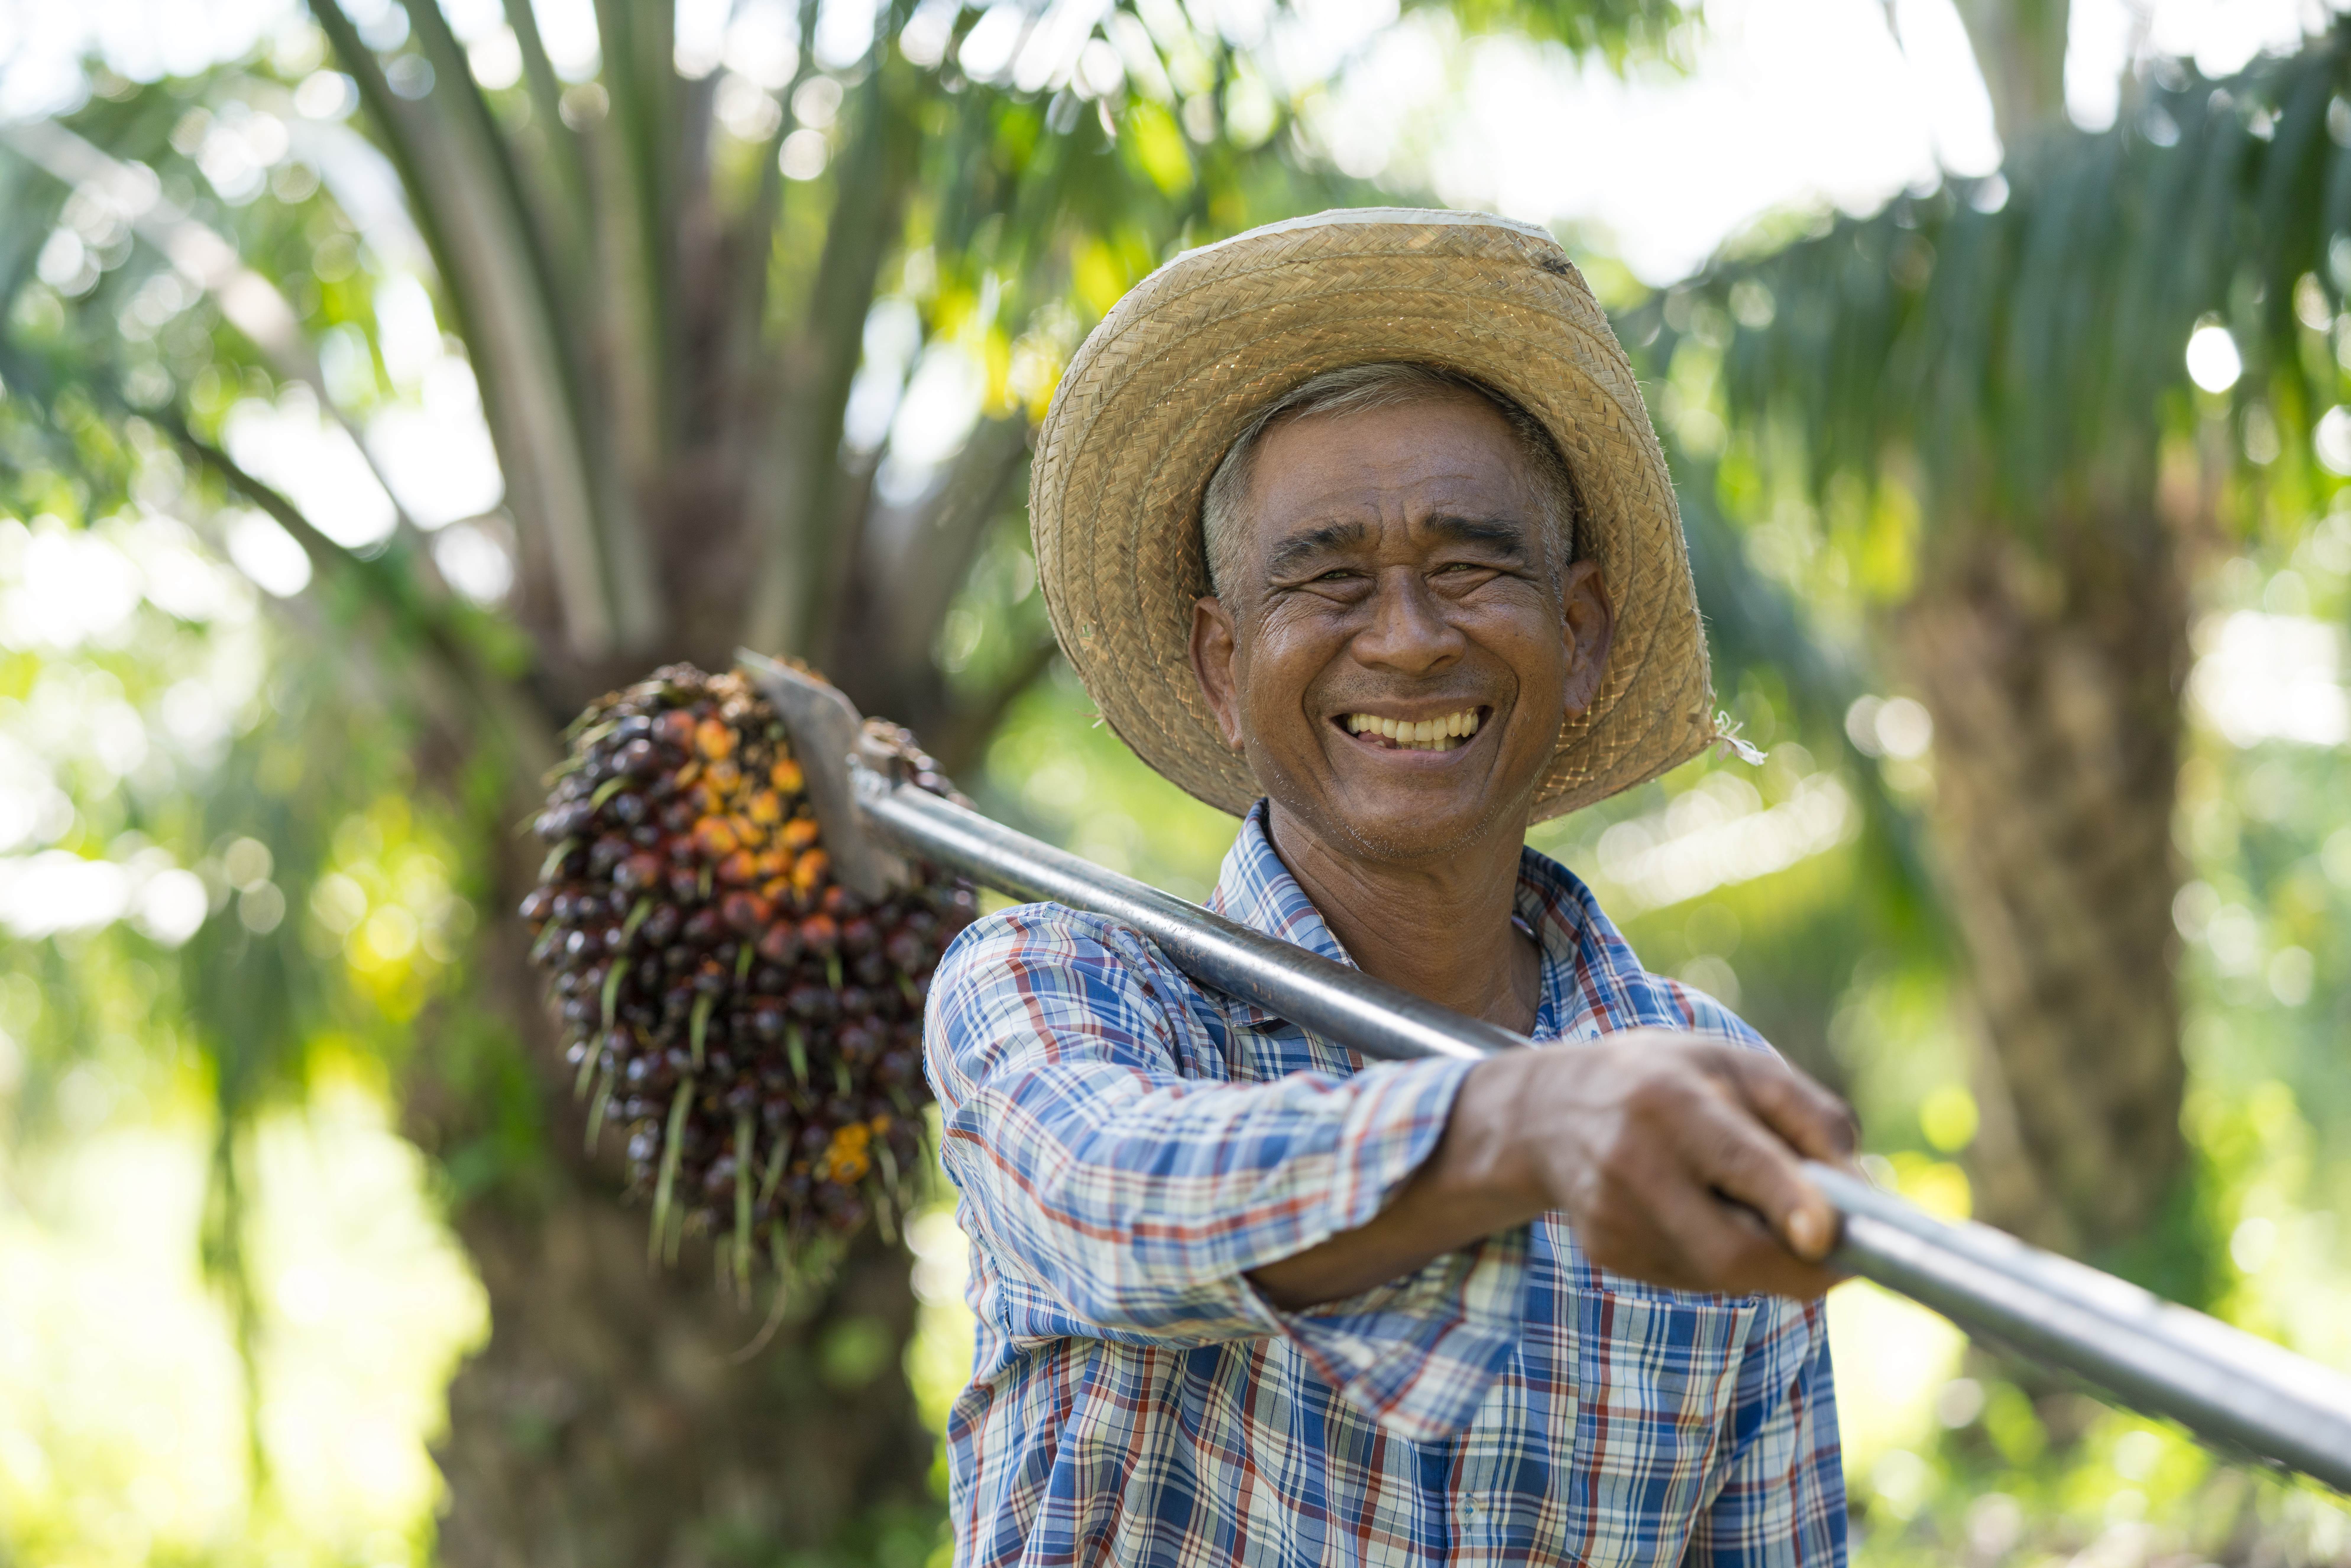 Farmer wearing a hat holding oil palm fruit bunch